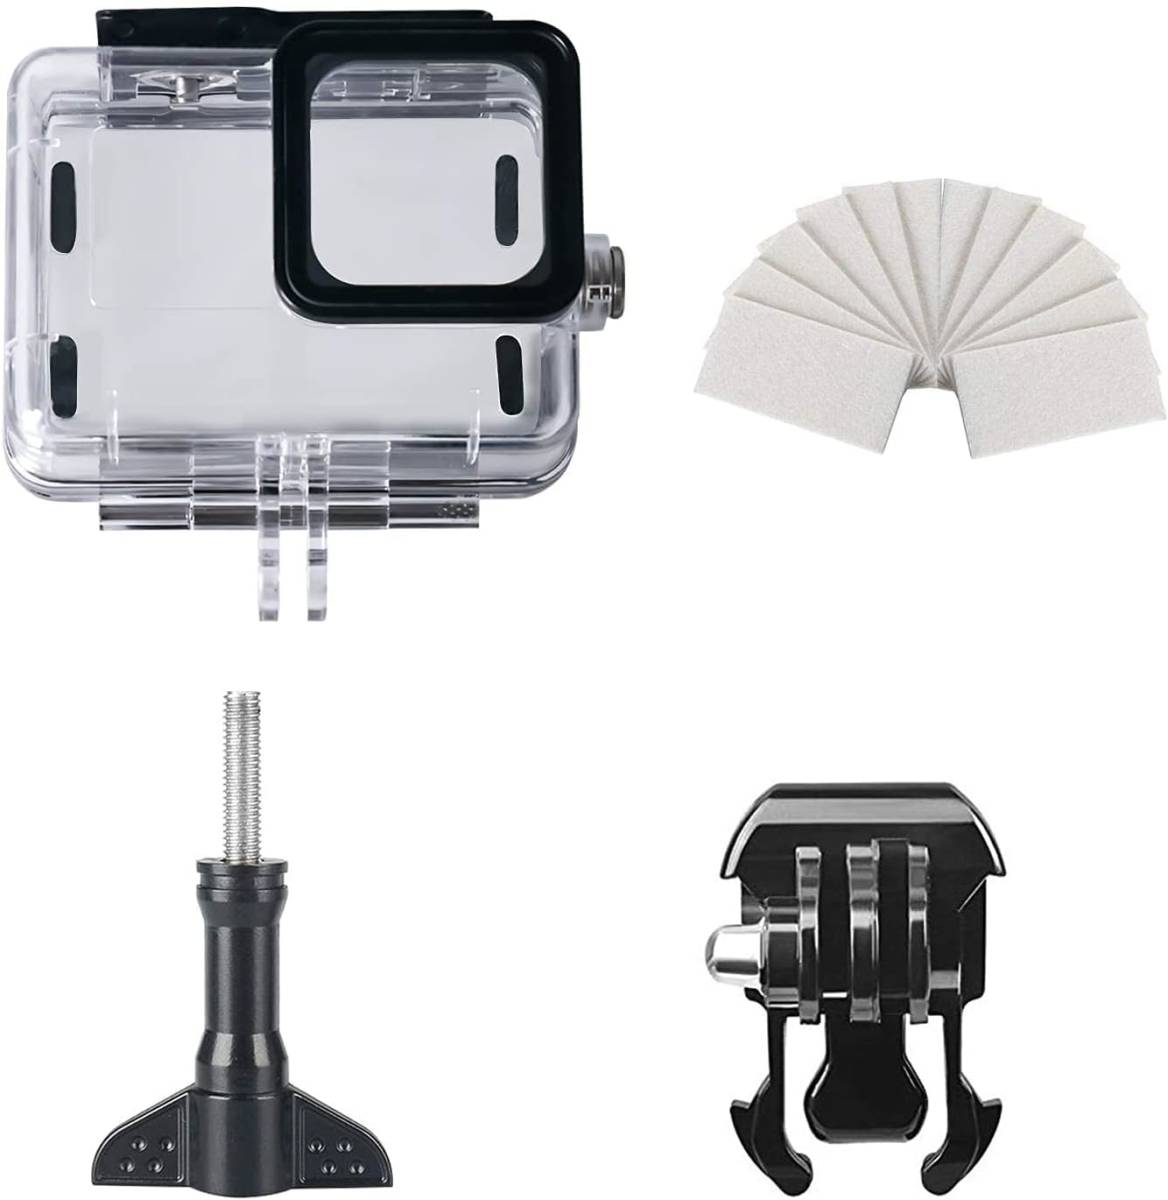 GoPro HERO 12/11/10/9 Black 専用 防水 防塵 保護ハウジング 耐圧水深60mまで対応 高品質ABS素材